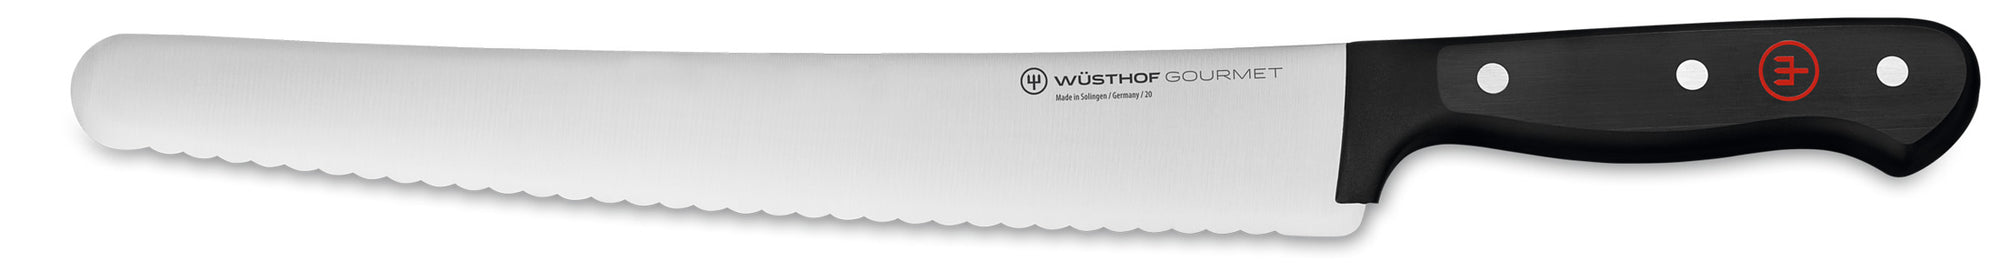 Wusthof Gourmet Super Slicer, 10-inch (26 cm), Wavy Edge - 4519 Canada